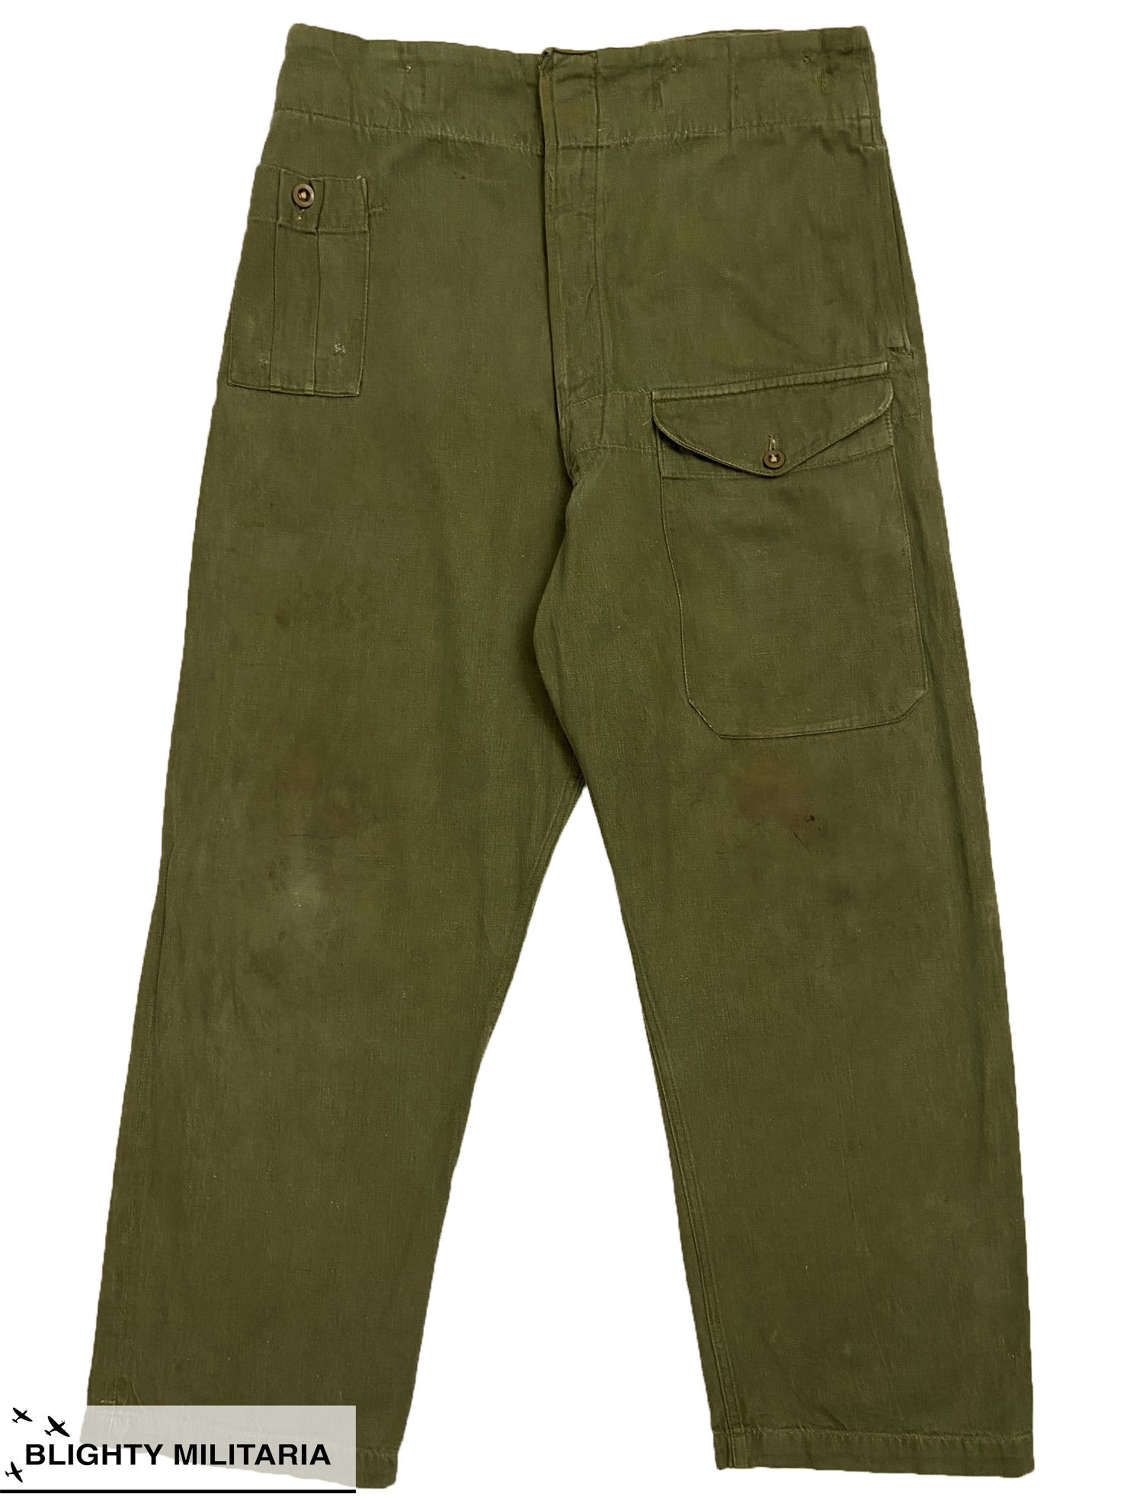 Original 1950s British Denim Battledress Trousers - Size 9